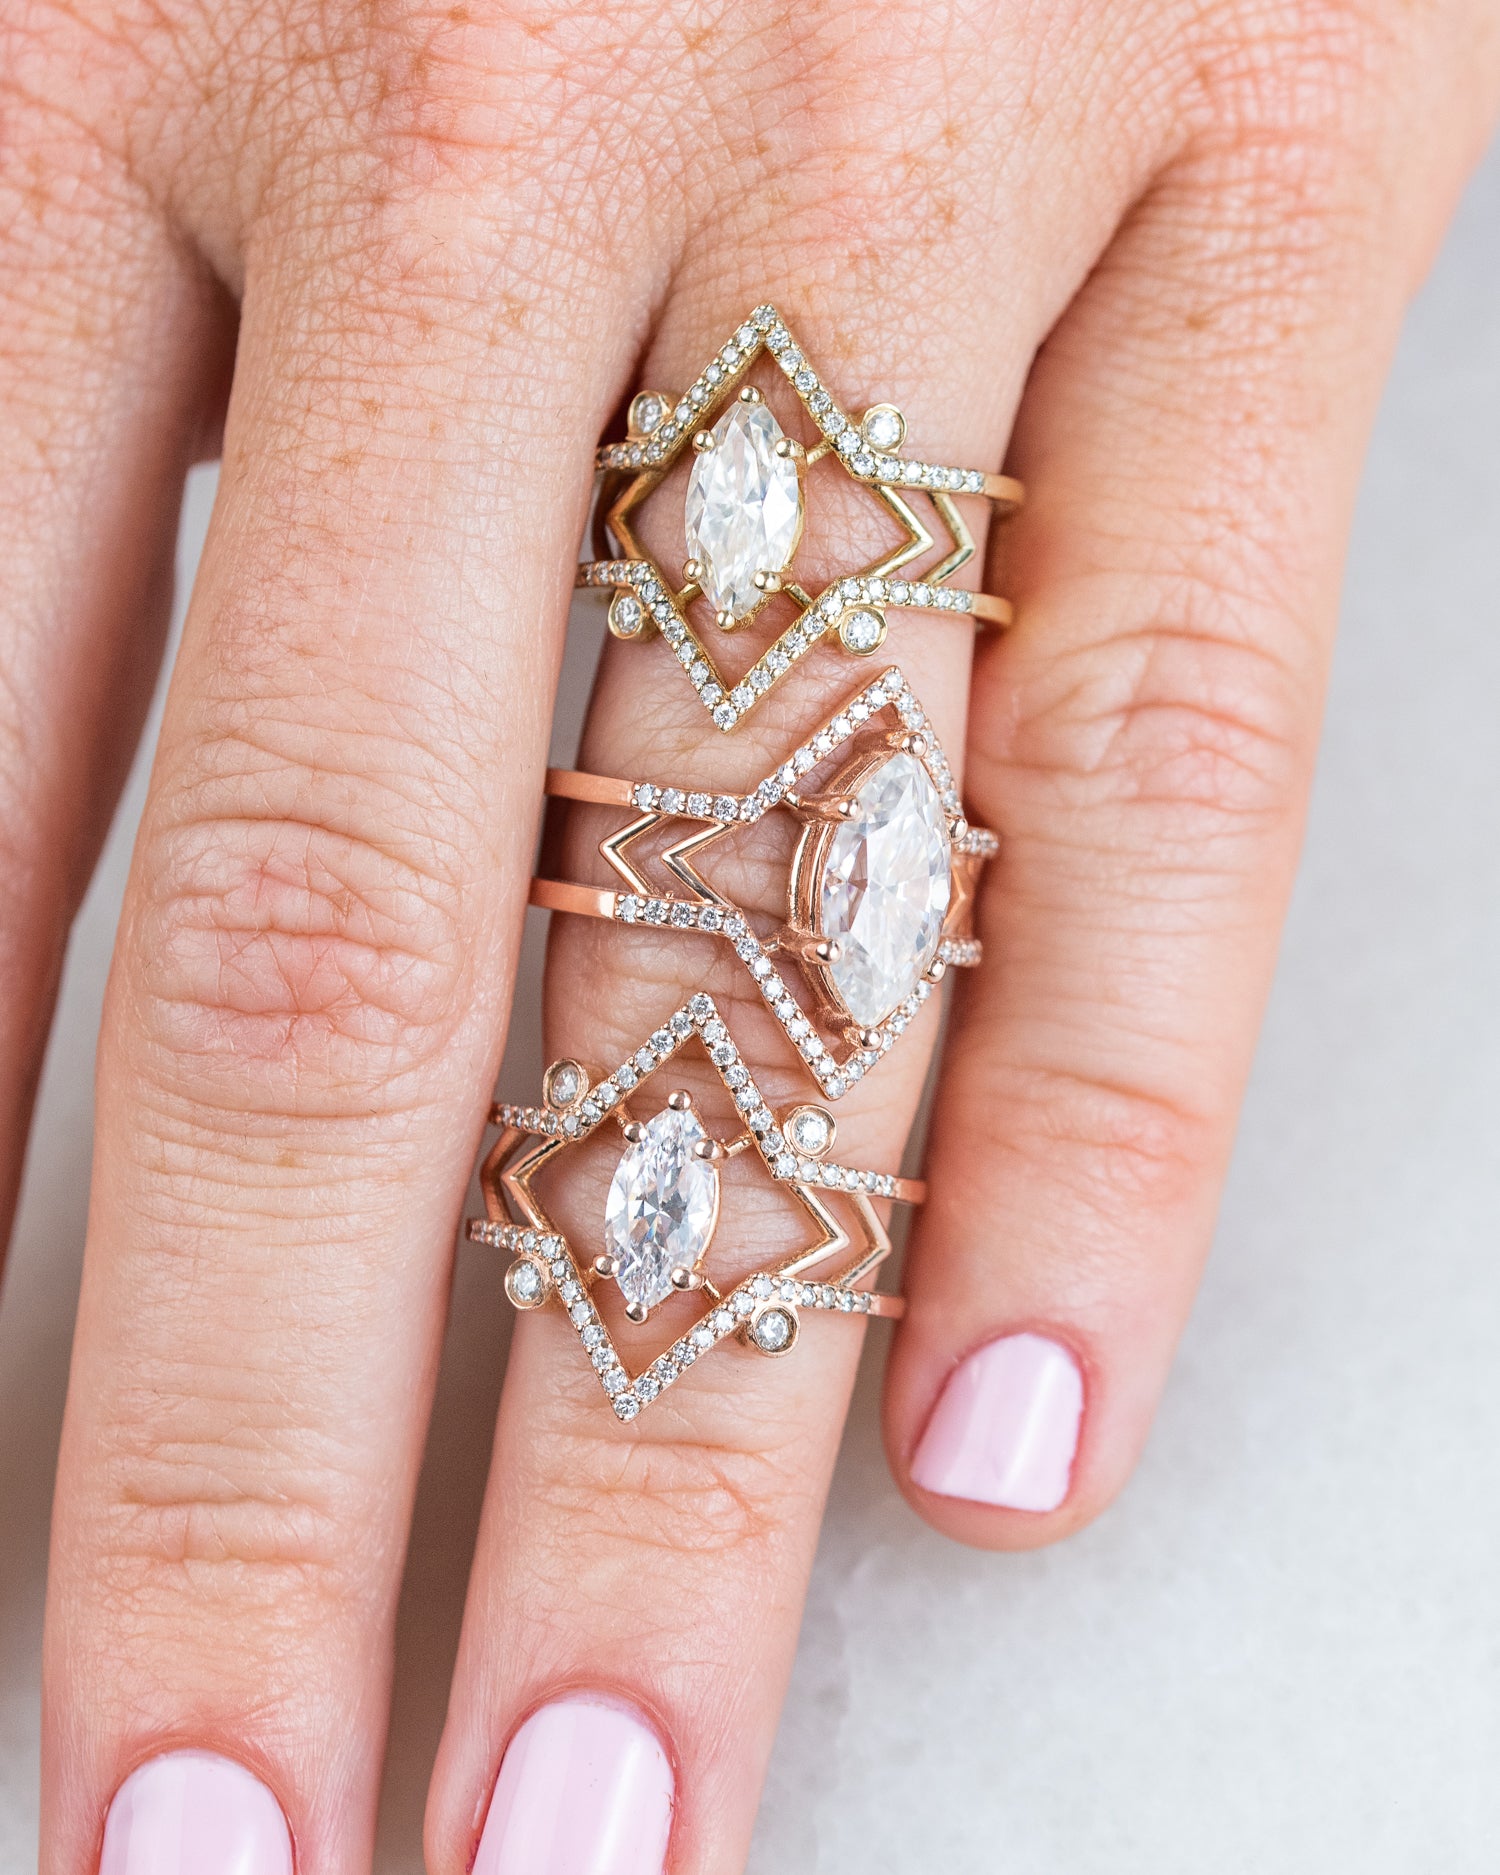 Giacomelli Jewelry ring